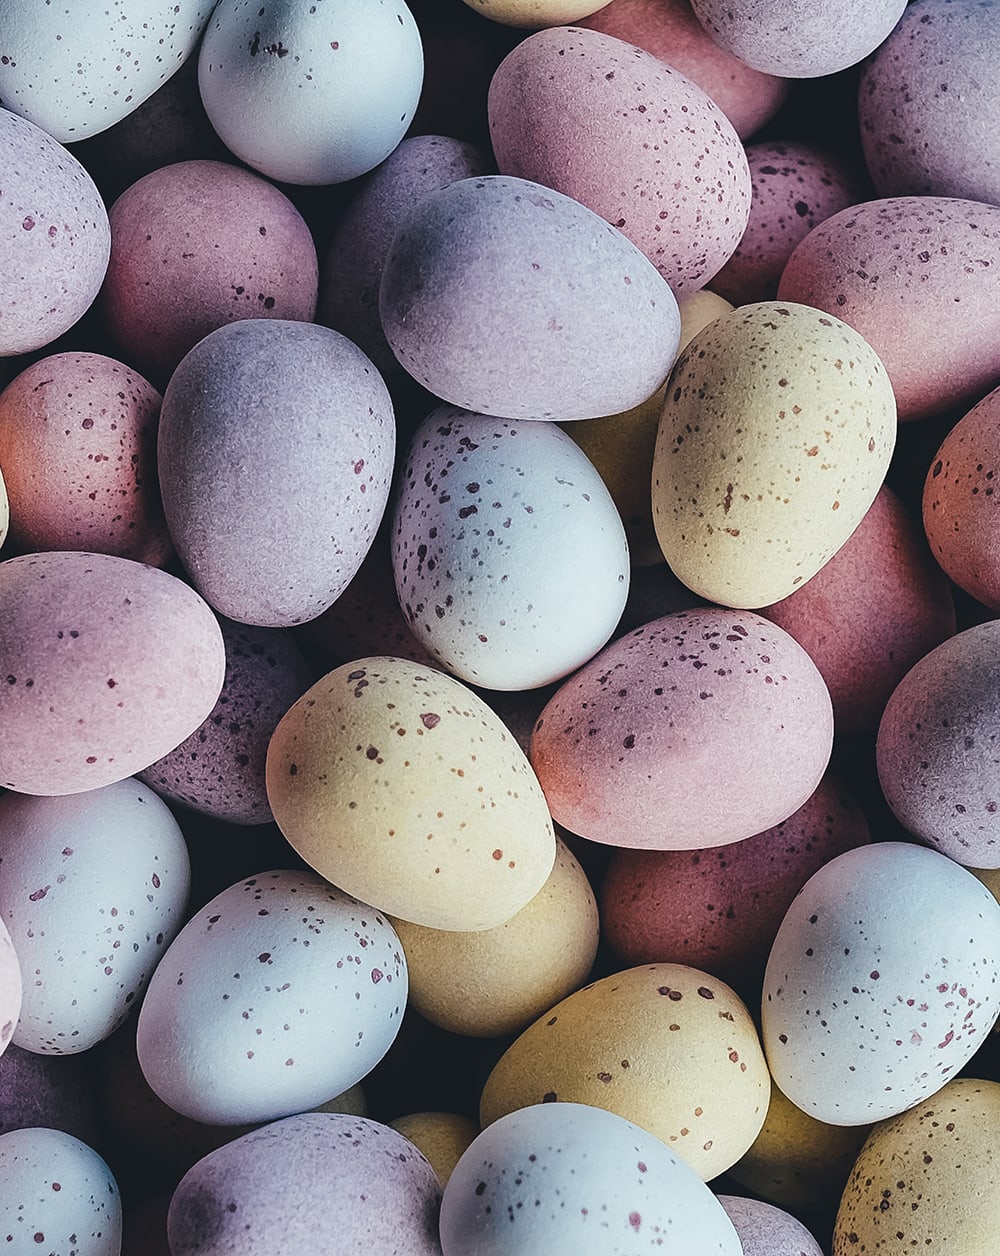 Spring Hashtags - Easter eggs